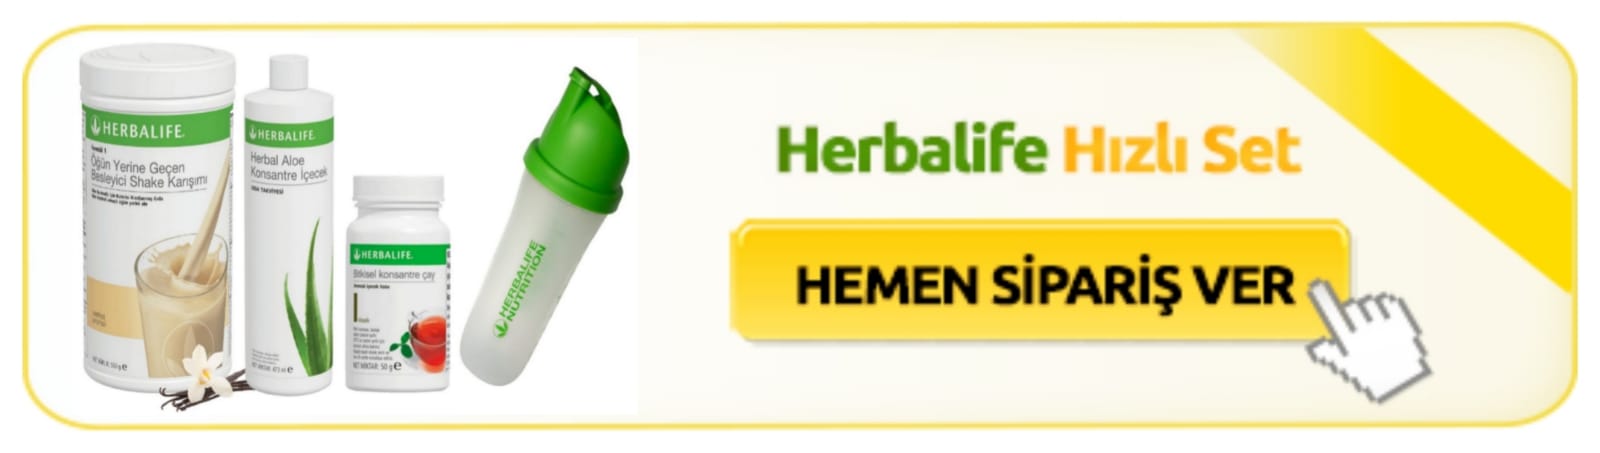 herbalife-hizli-set-1.jpg - 50.26 KB